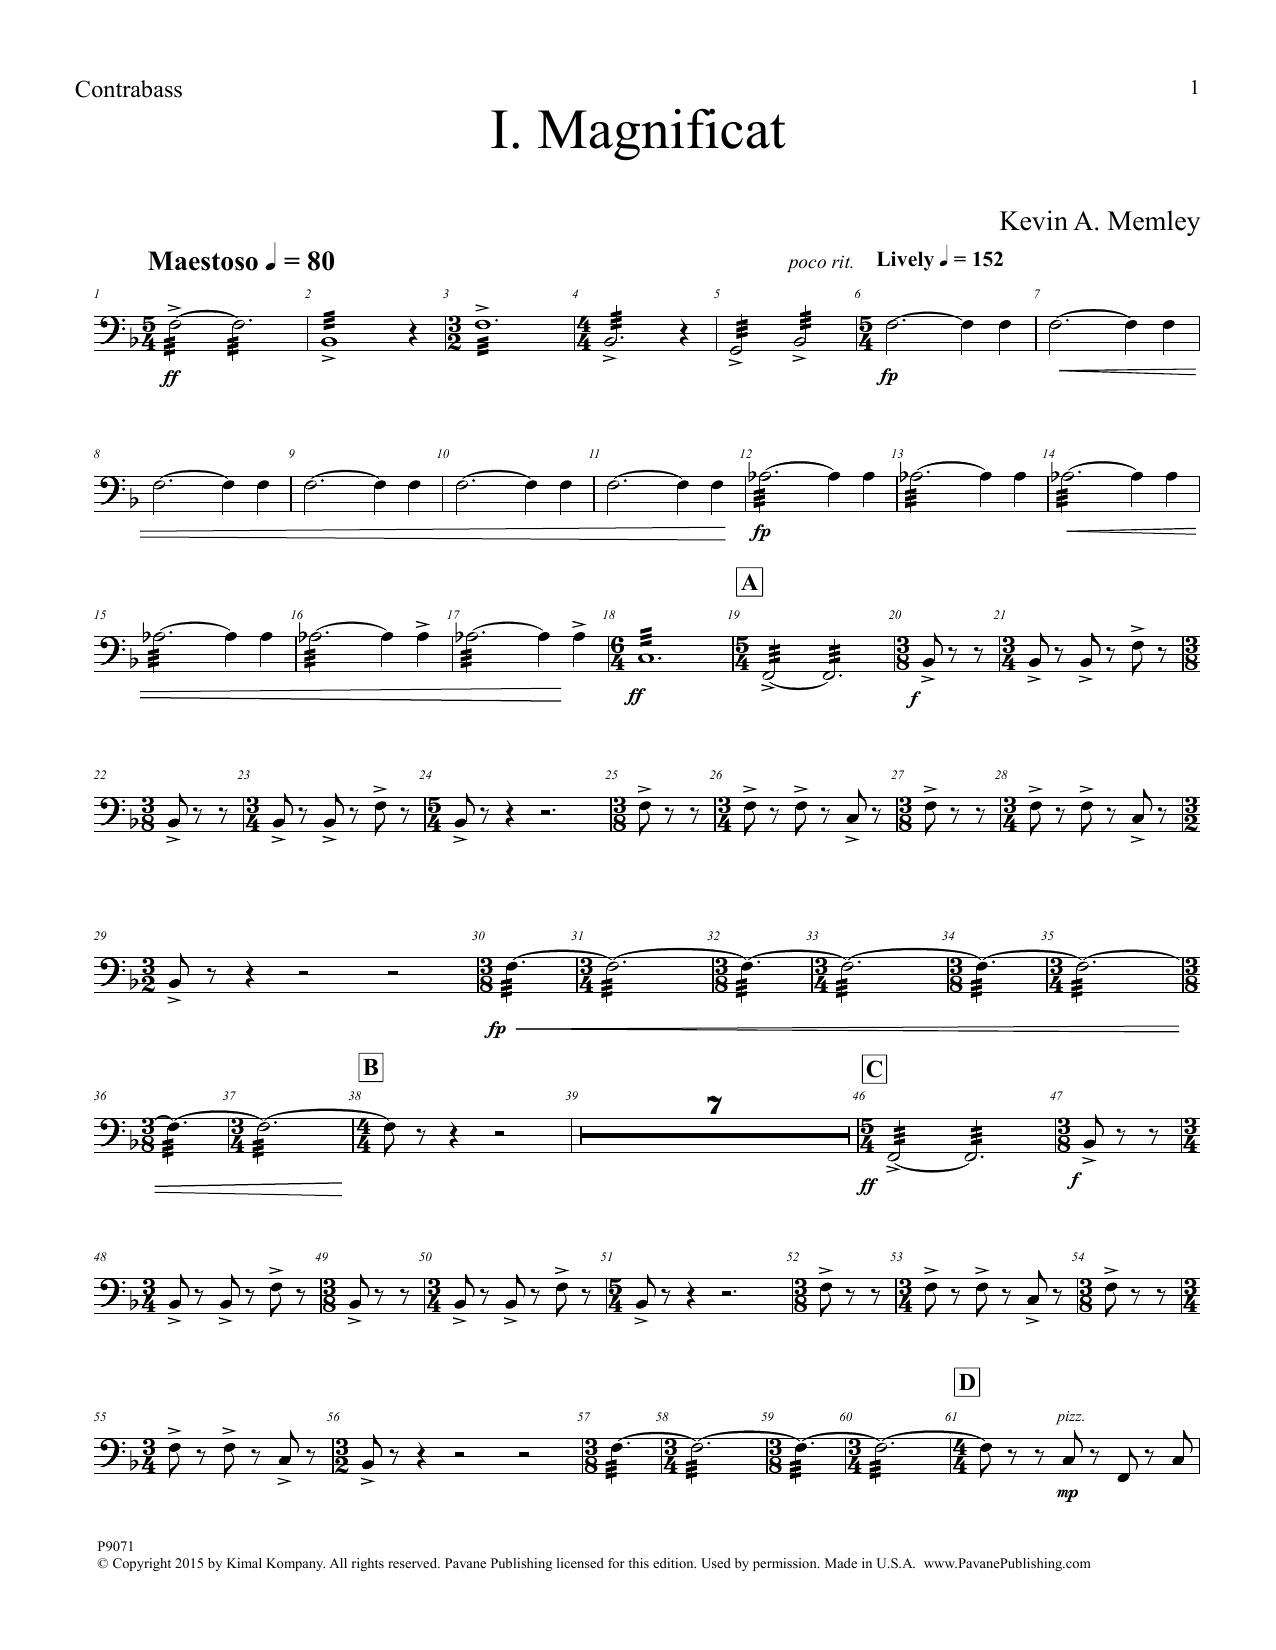 Download Kevin A. Memley Magnificat - Contrabass Sheet Music